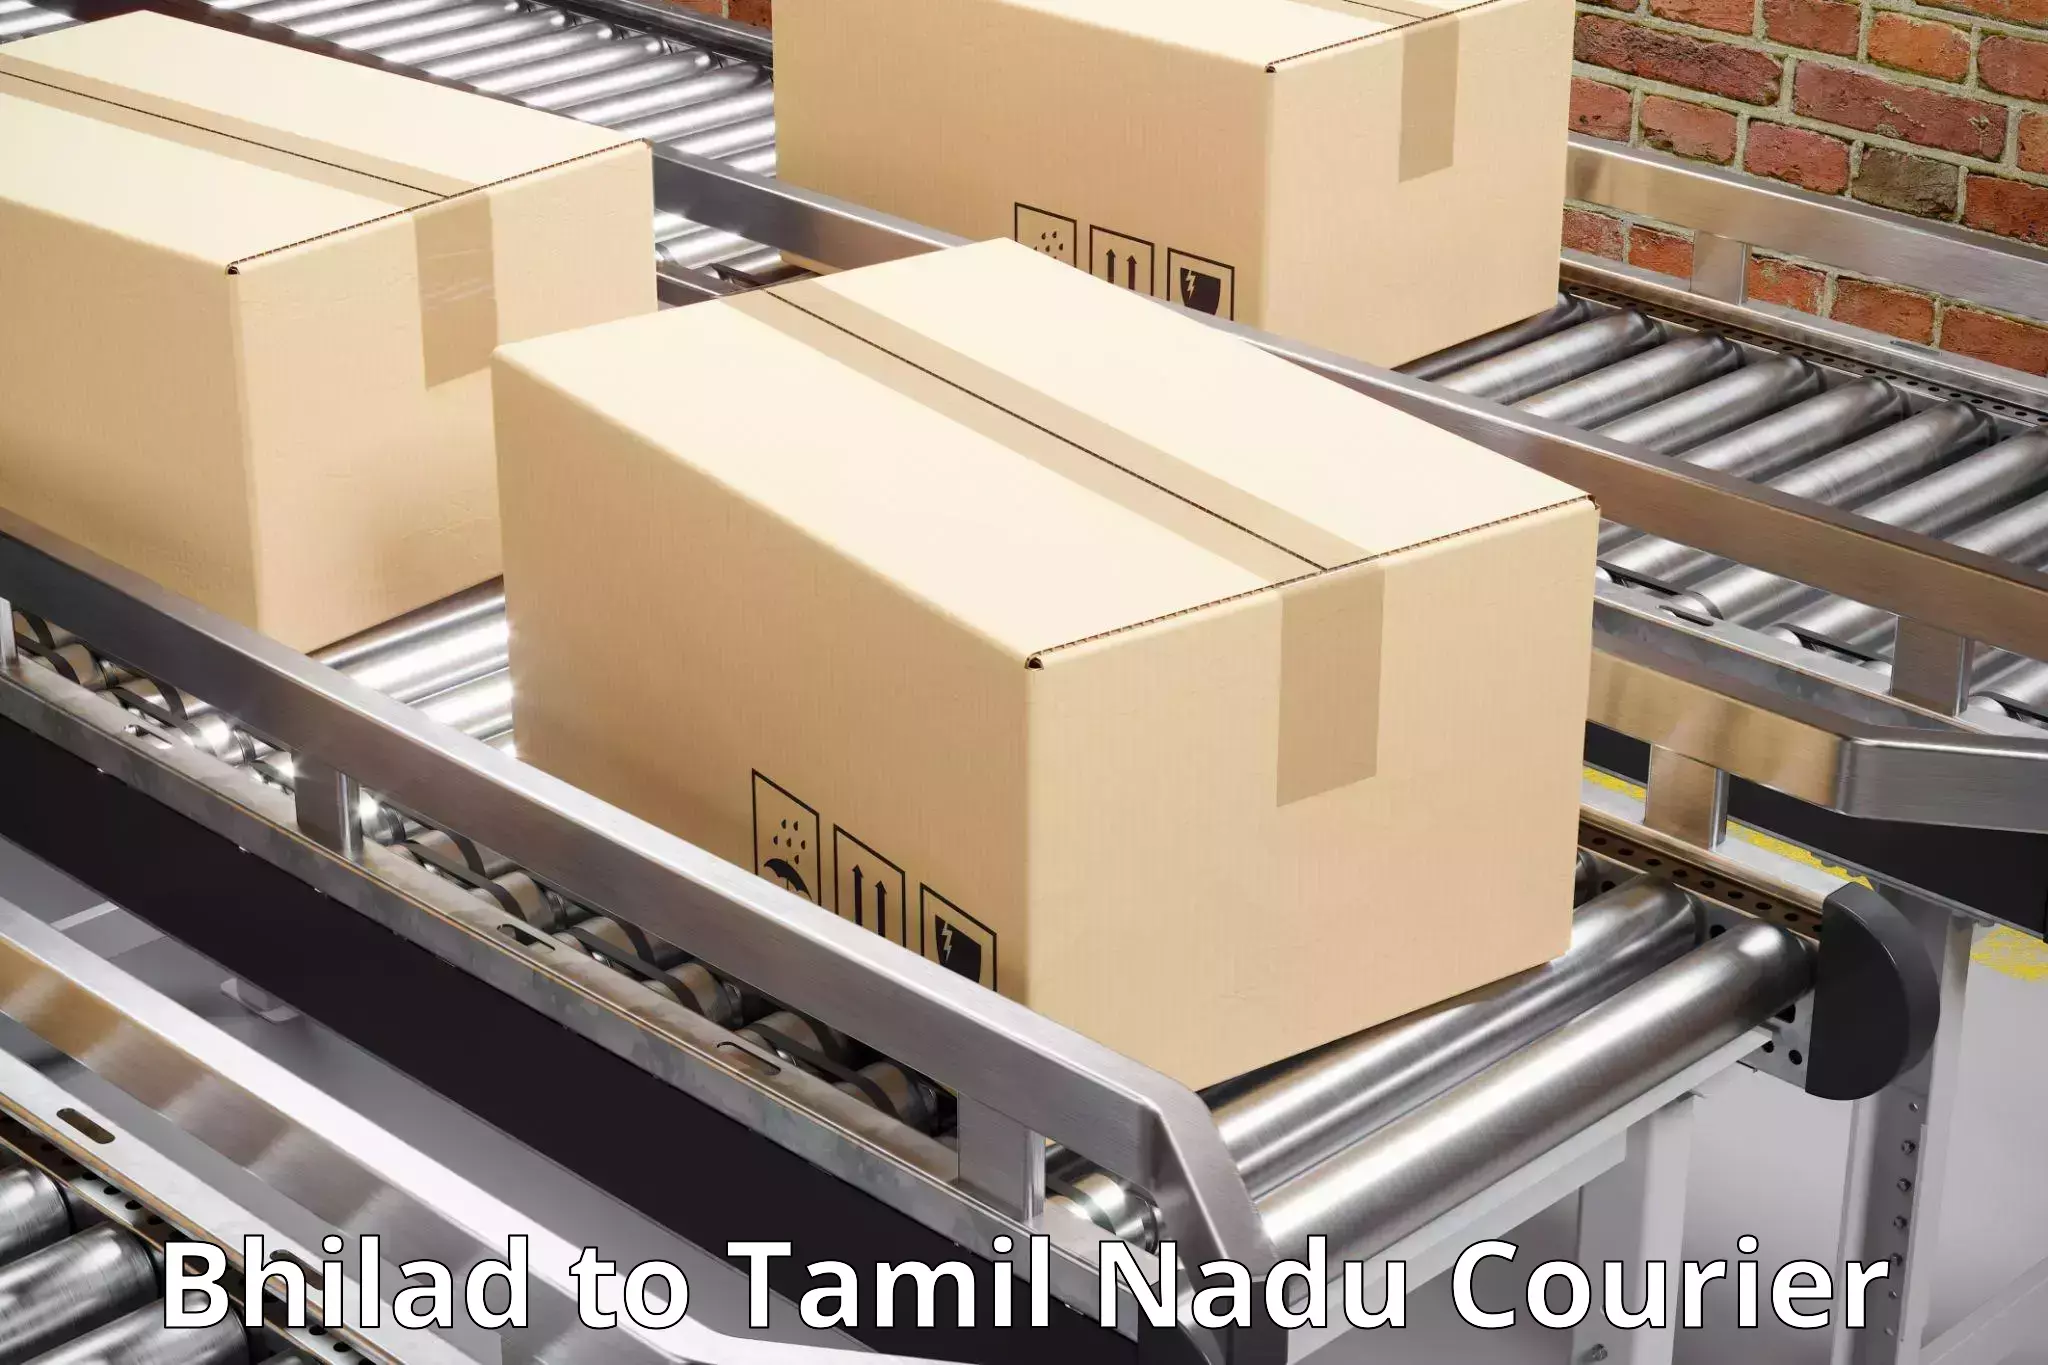 Same-day delivery solutions Bhilad to Tirukalukundram